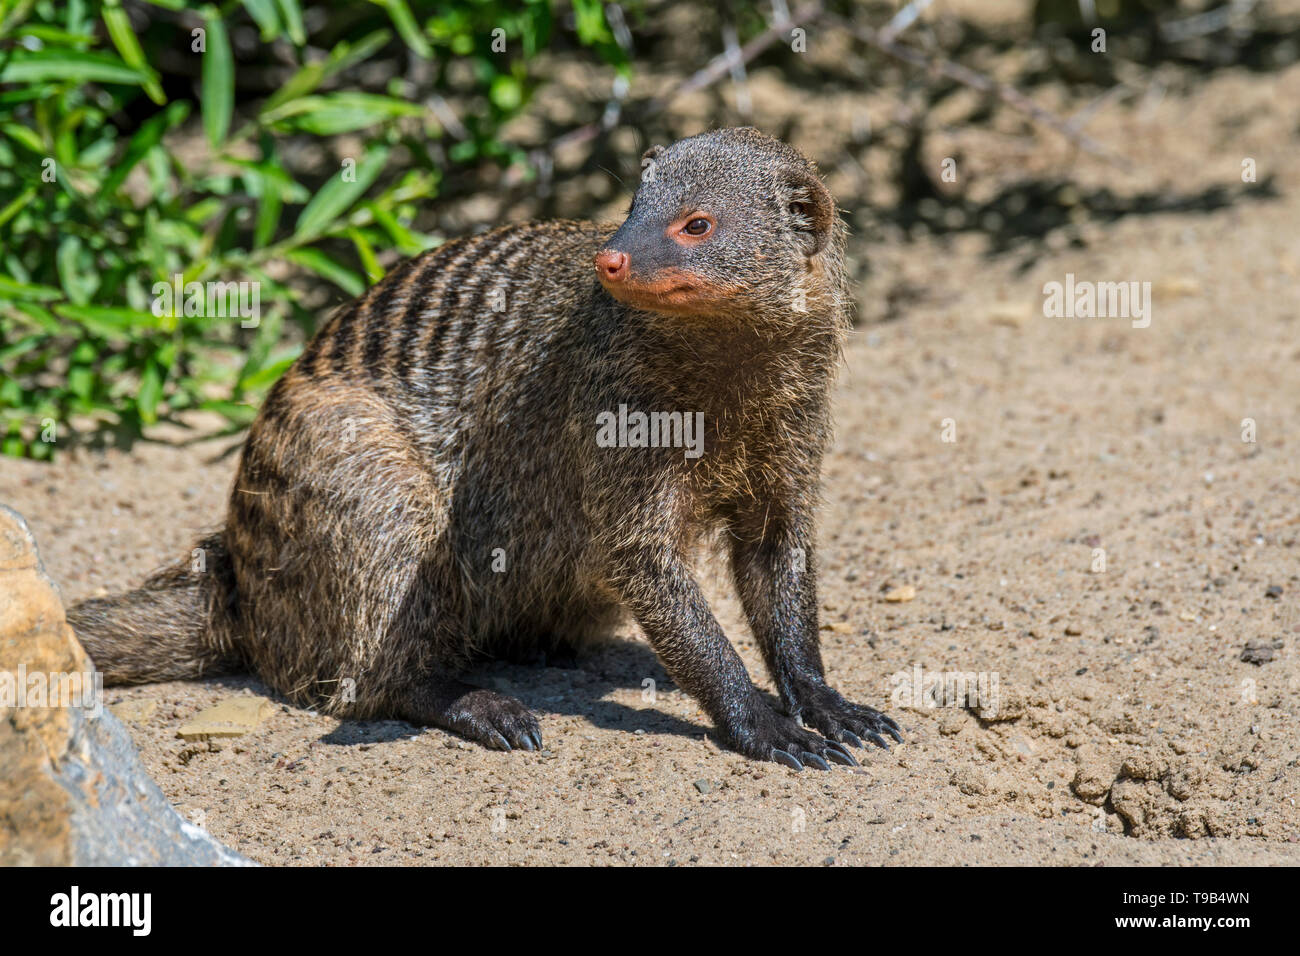 Banded mongoose (Mungos mungo) im sand sitzen, beheimatet in Afrika Stockfoto